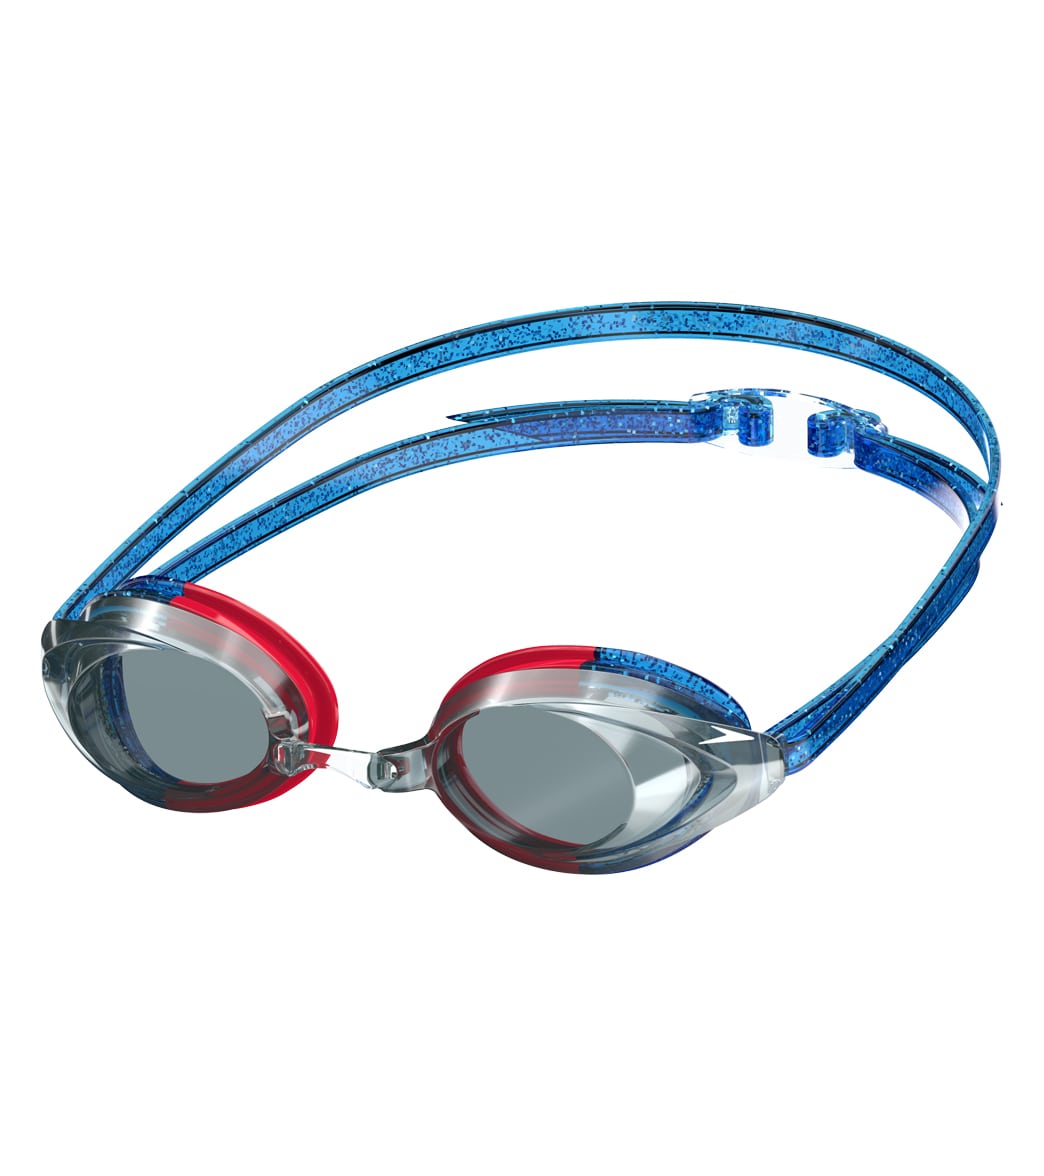 Speedo Blue/Celeste/Silver Vanquisher 2.0 Mirrored Limited Edition Goggles